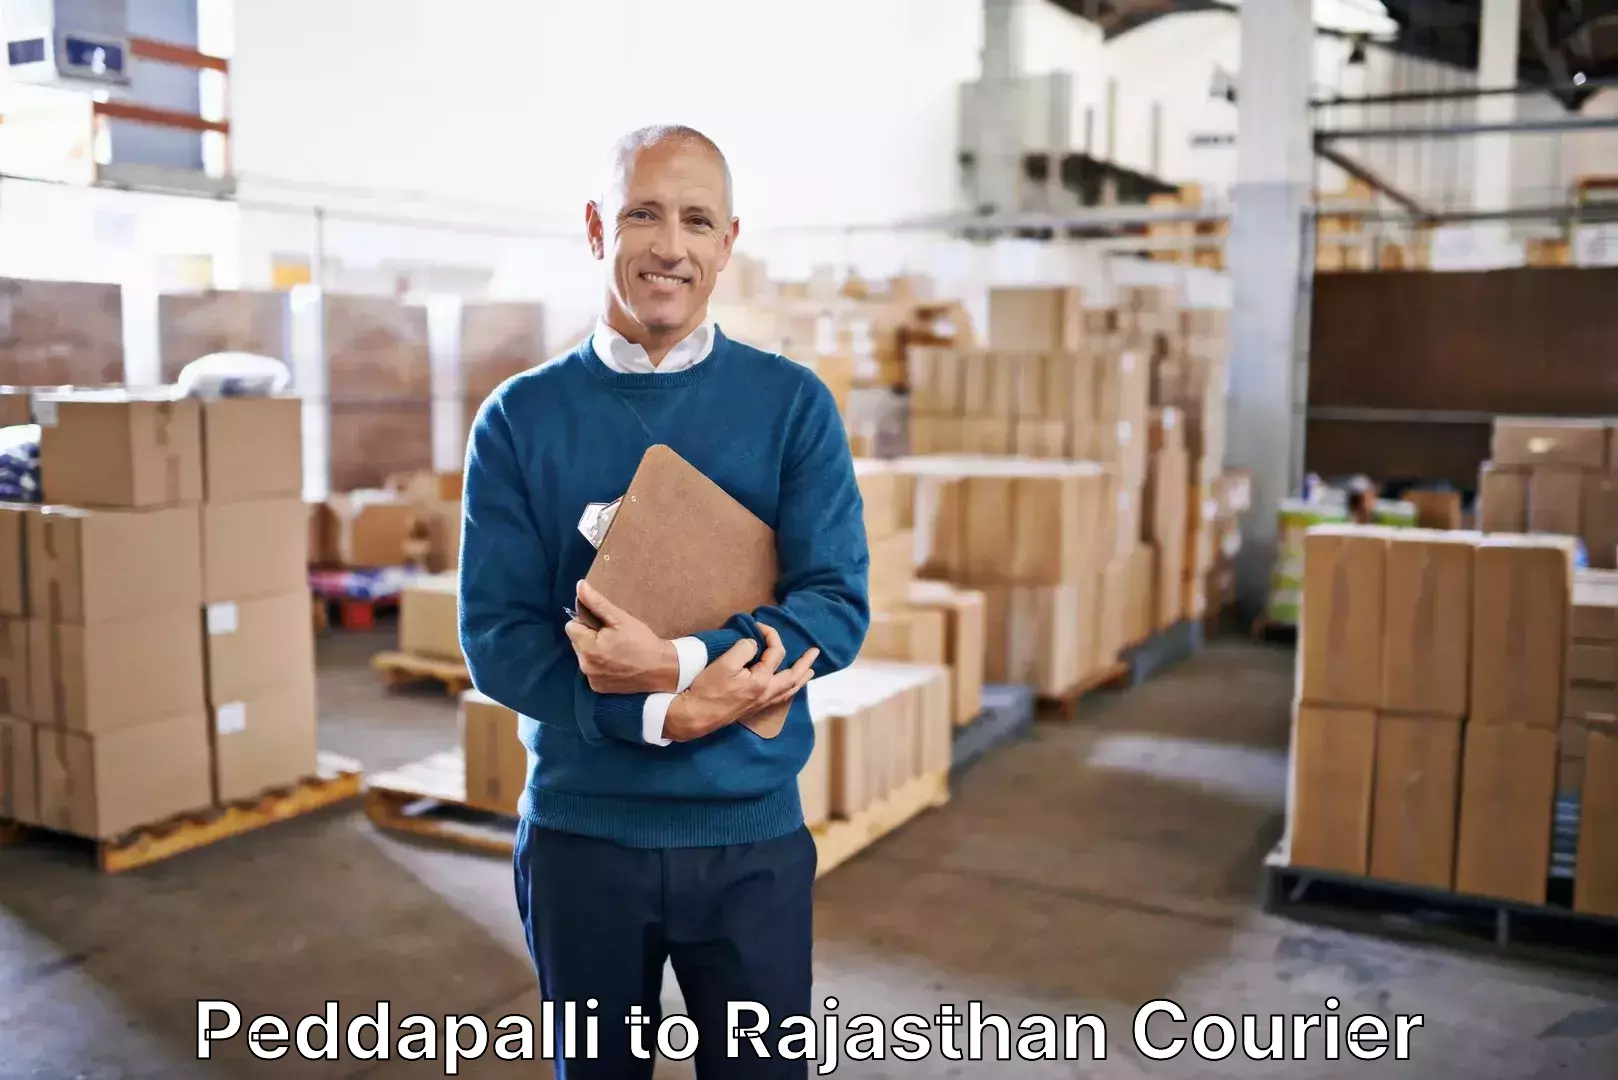 Luggage shipment specialists Peddapalli to Rajasthan